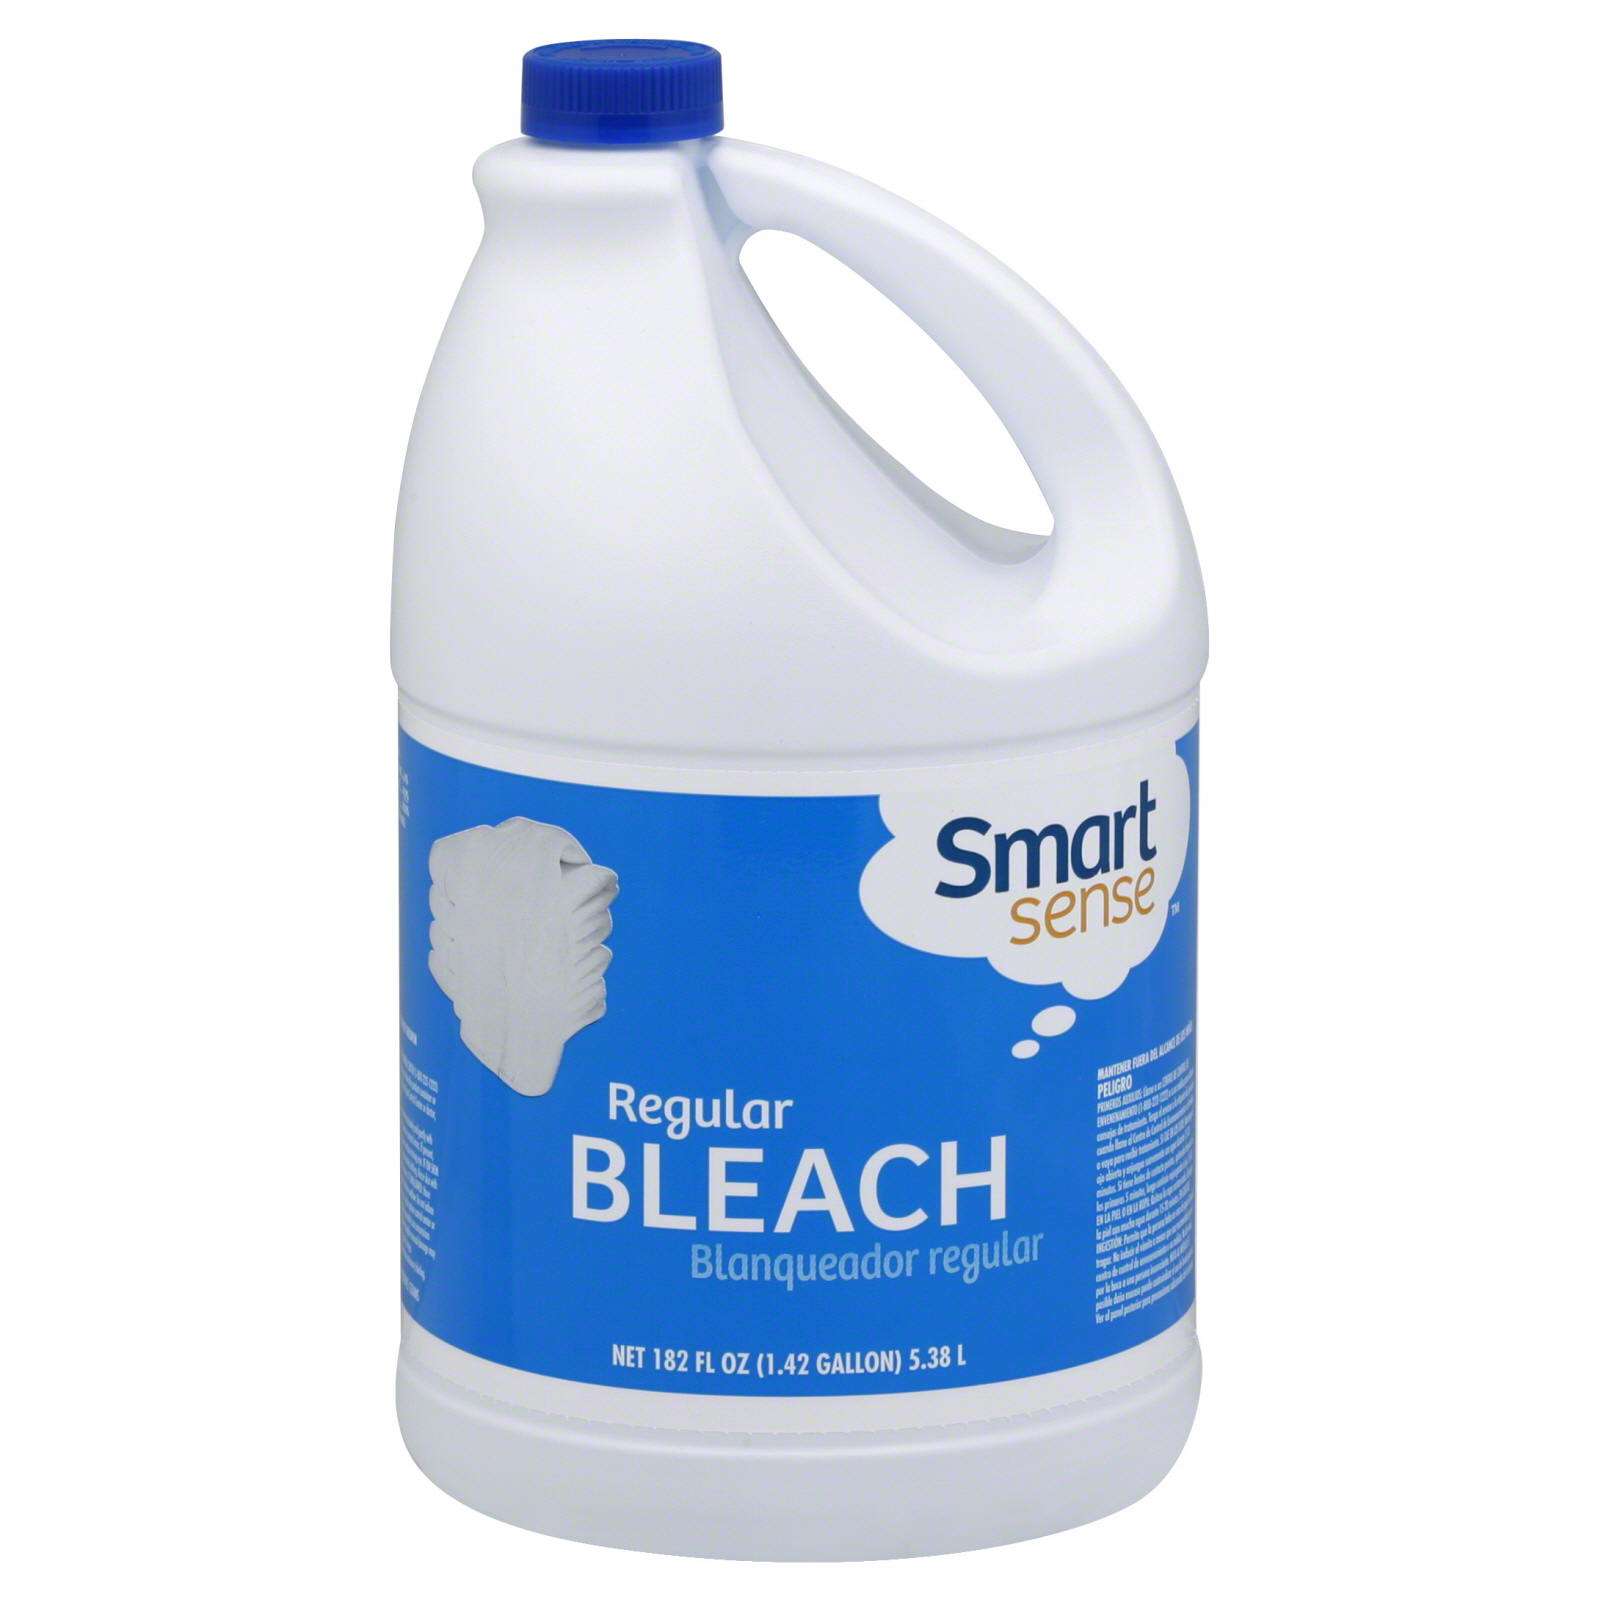 Smart Sense Bleach, Regular, 182 fl oz (1.42 gl) 5.38 lt